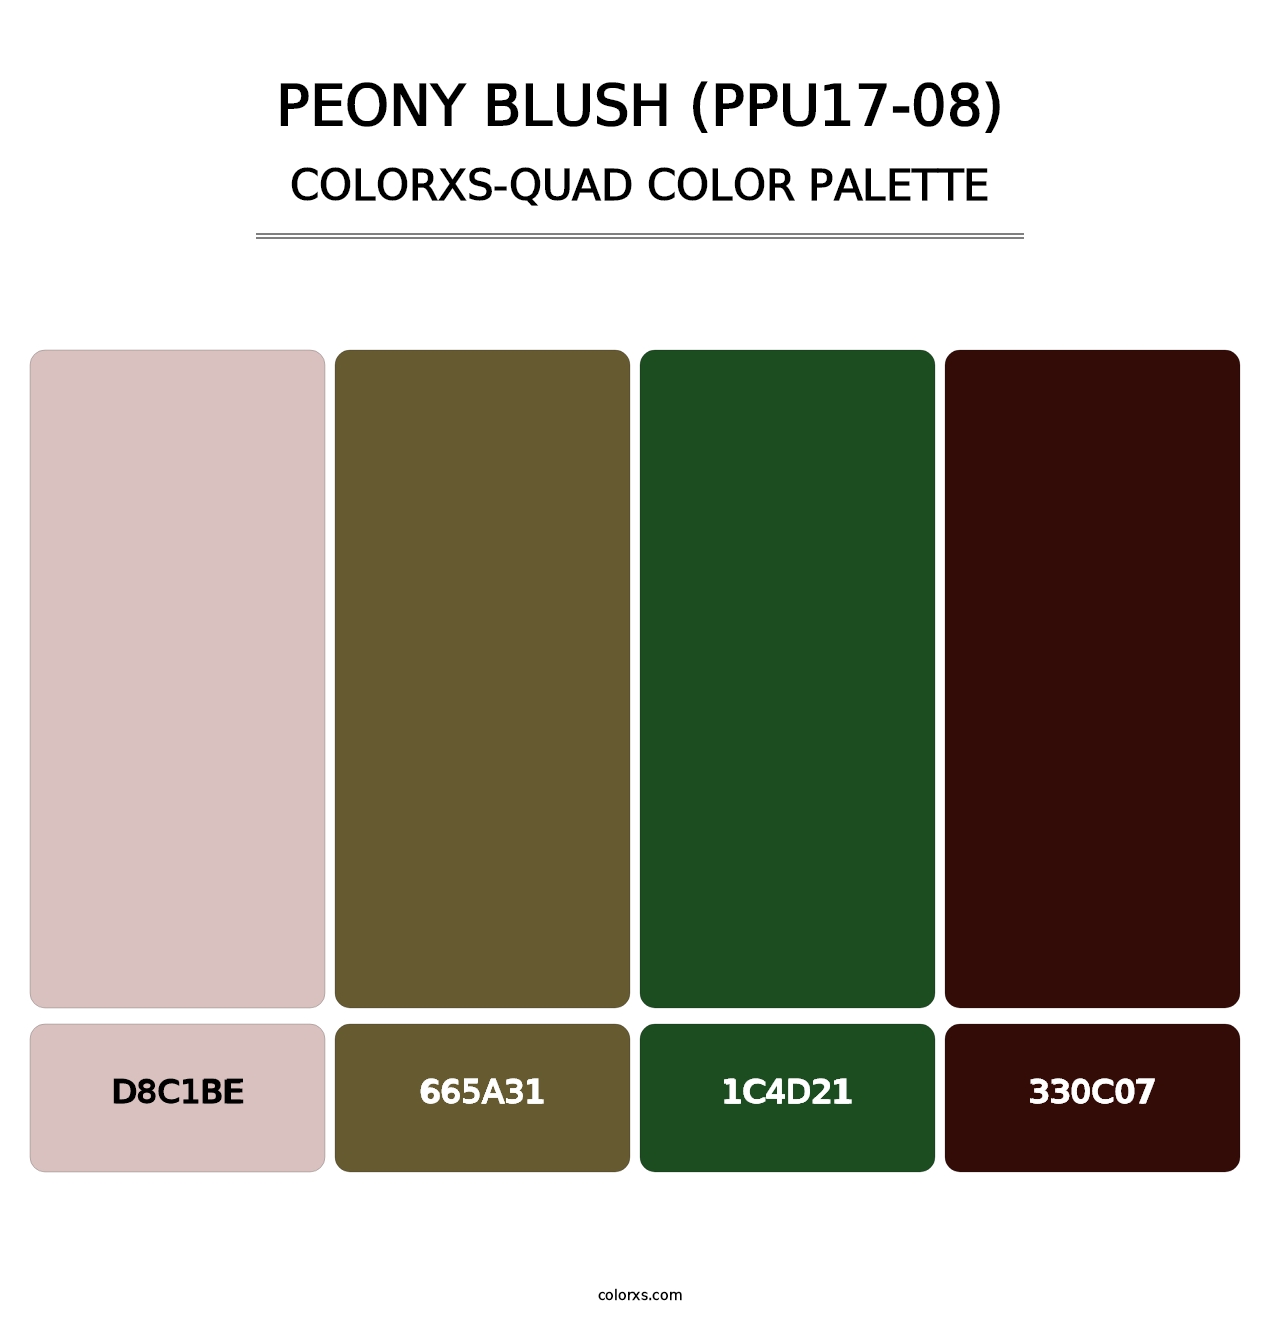 Peony Blush (PPU17-08) - Colorxs Quad Palette